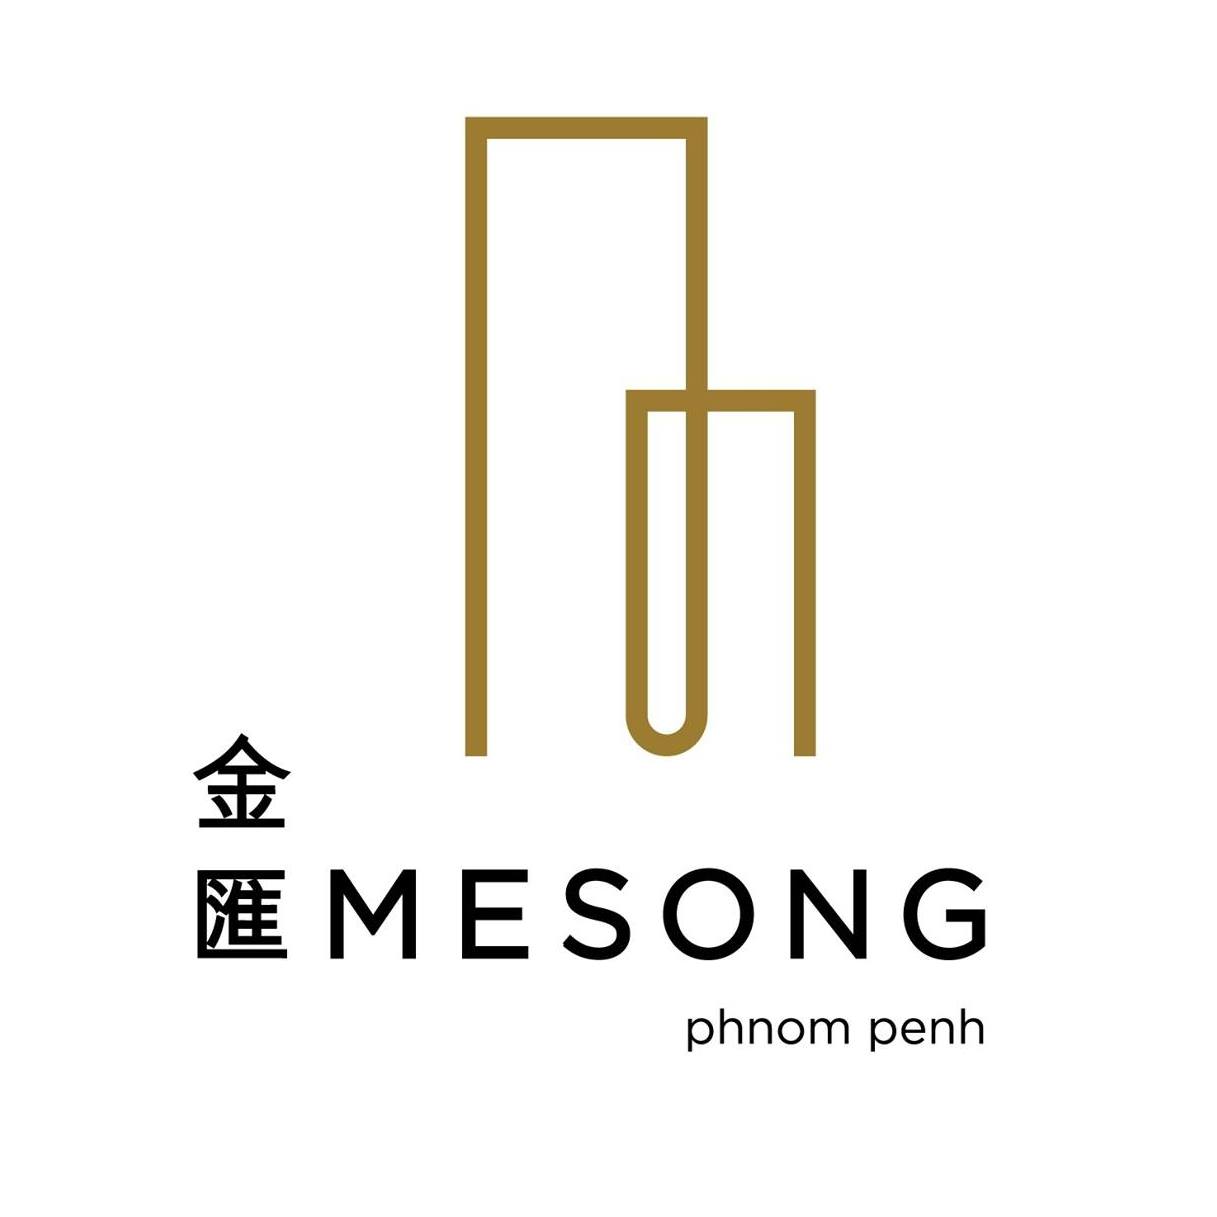 https://images.realestate.com.kh/users/2021-07/mesong-tower-logo.jpg